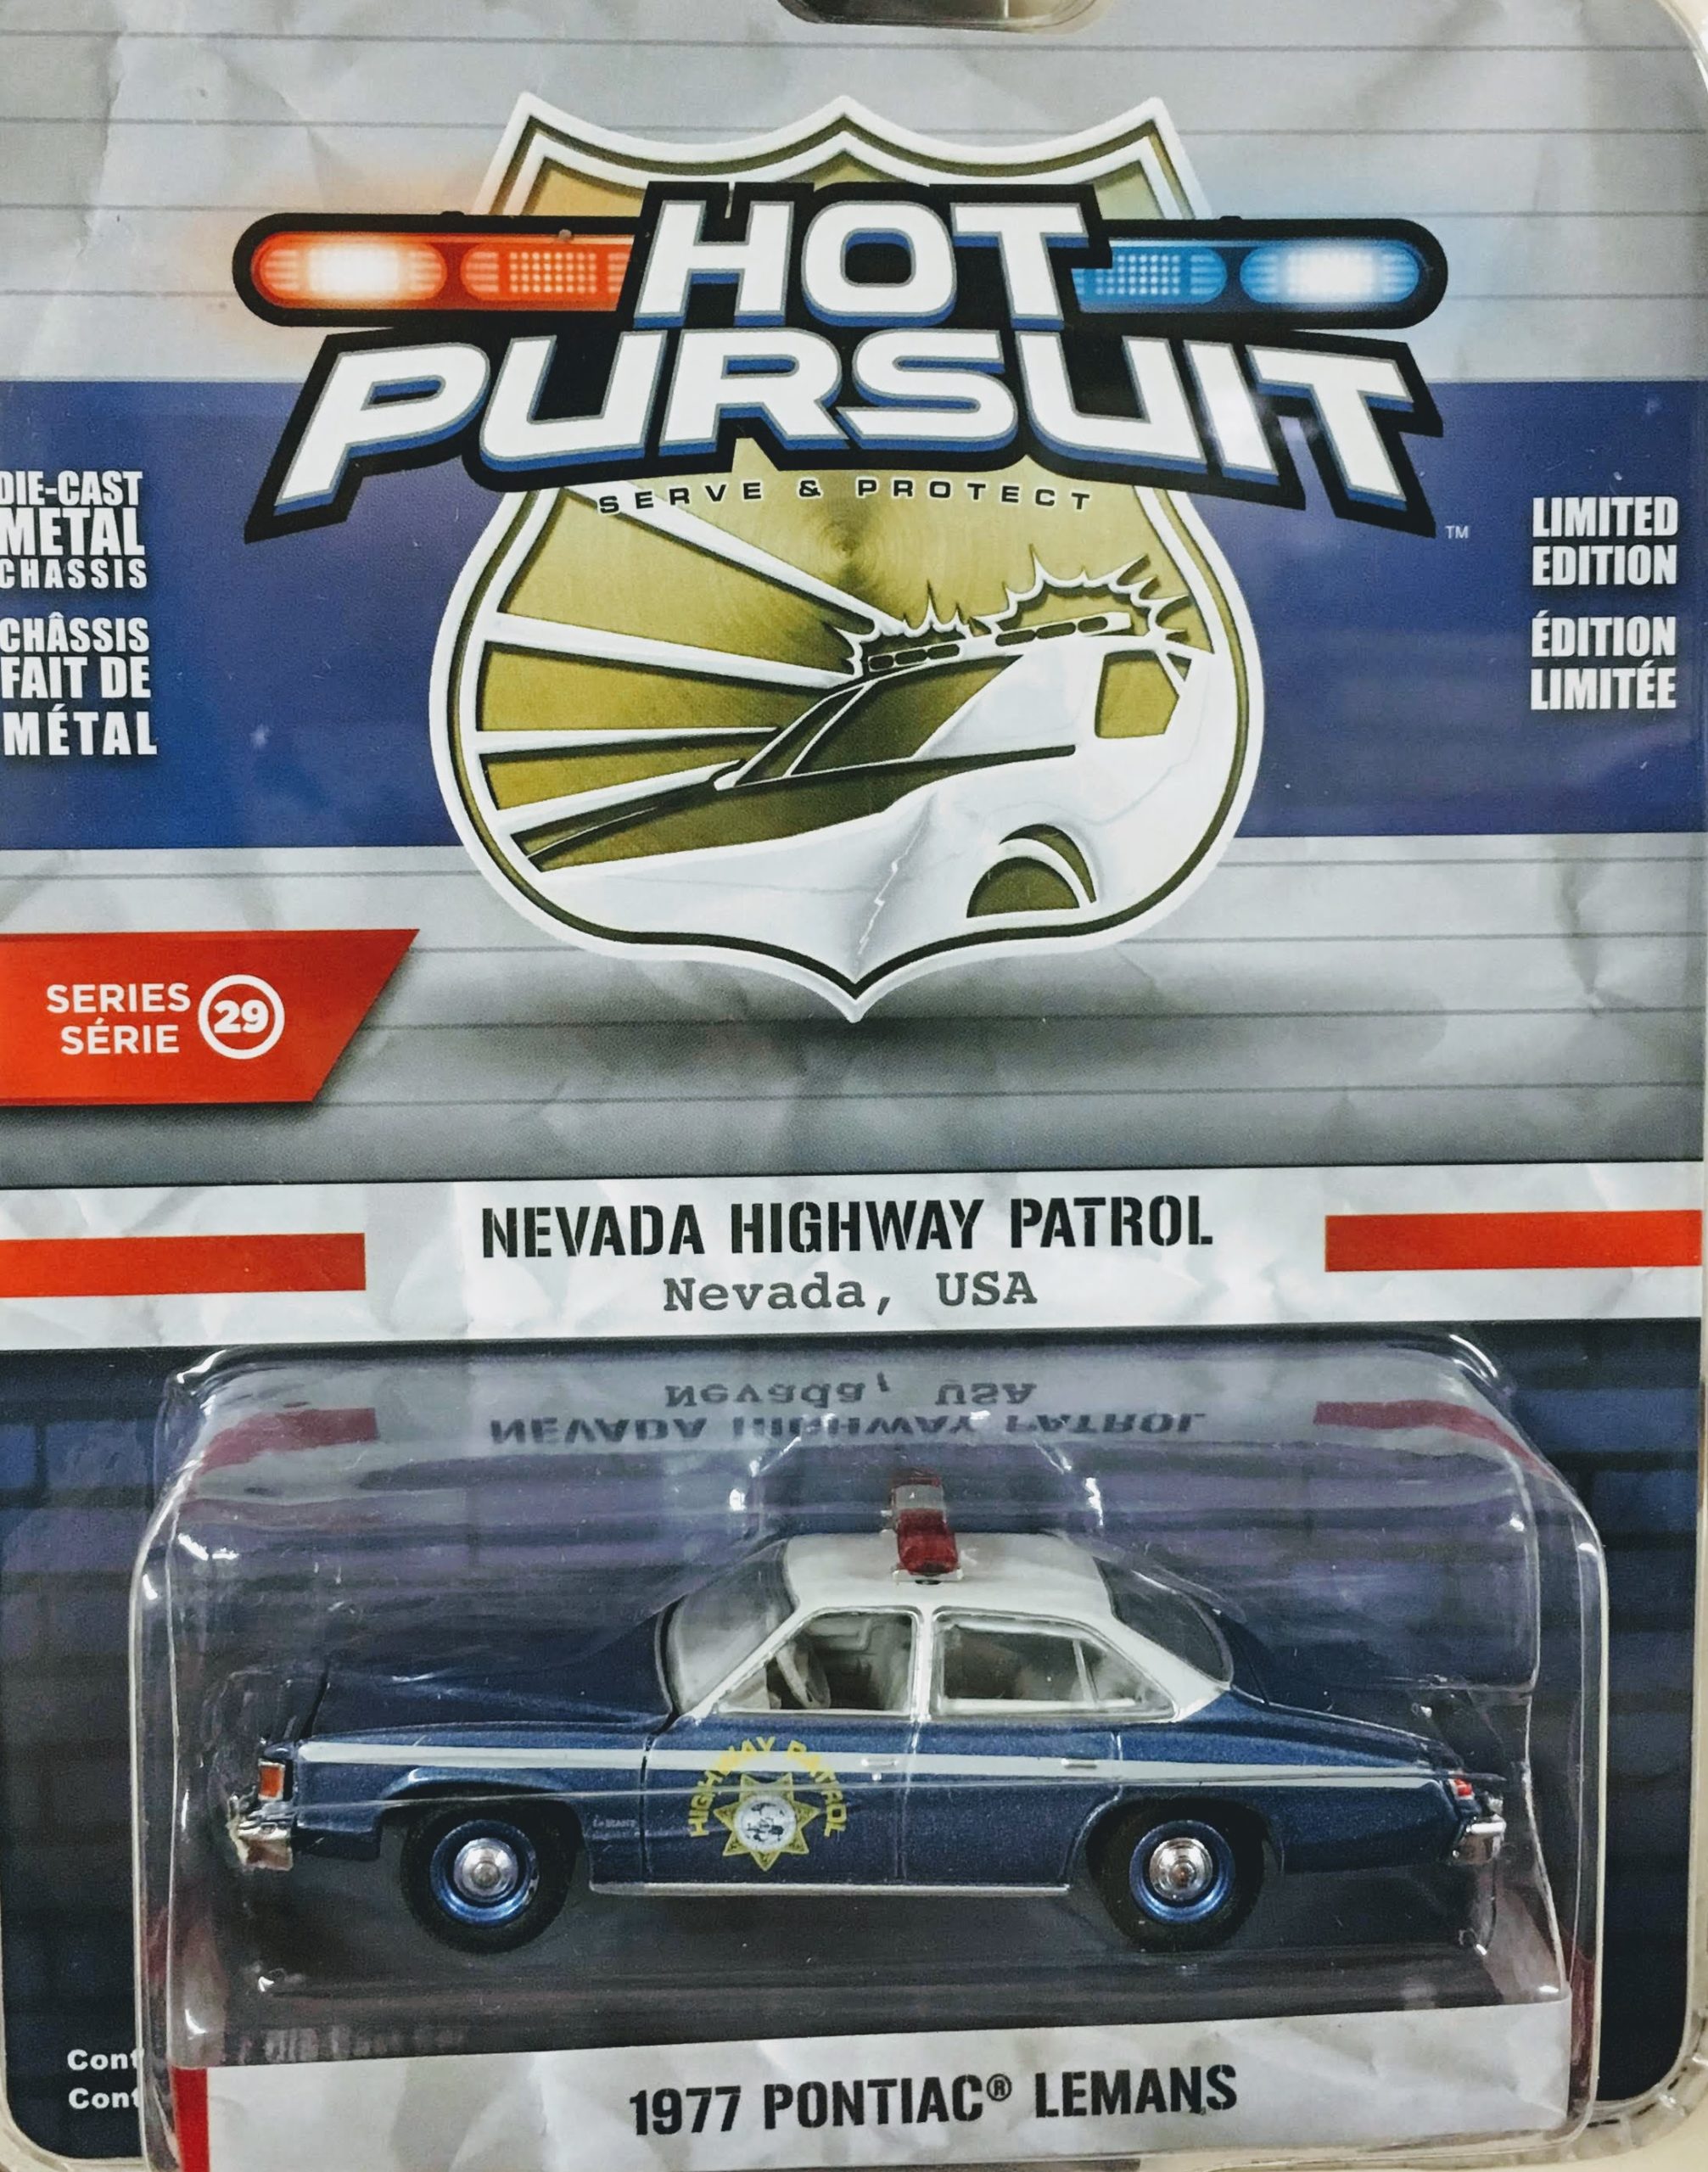 Pontiac Lemans 1977, Nevada Highway Patrol 1:64